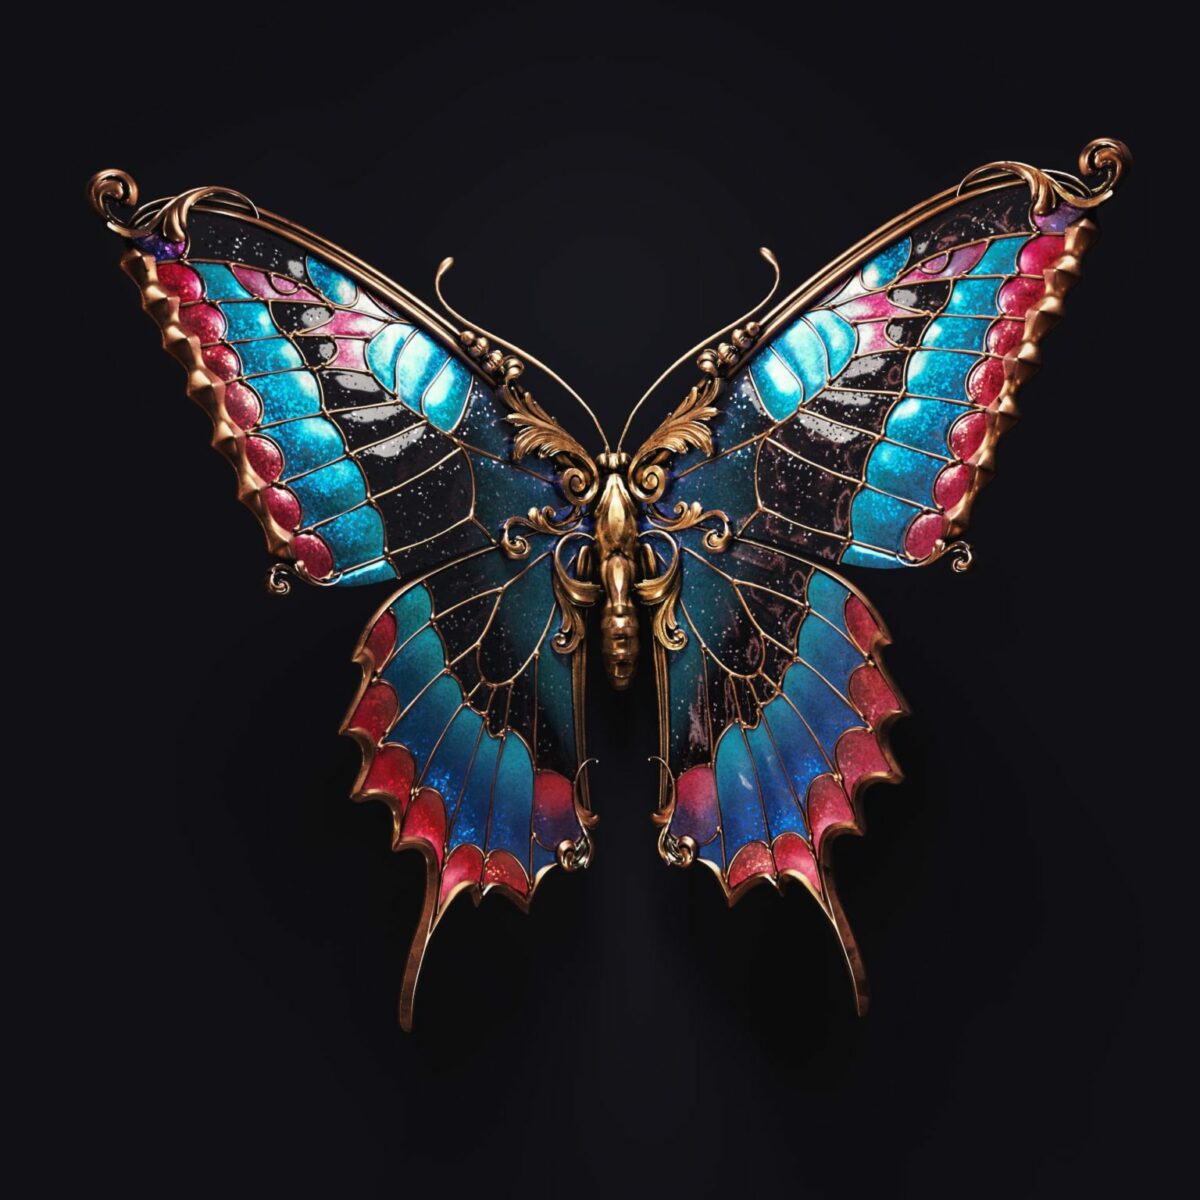 Jewel Insects Awesome Hyper Realistic Digital Jewelry By Sasha Vinogradova (4)